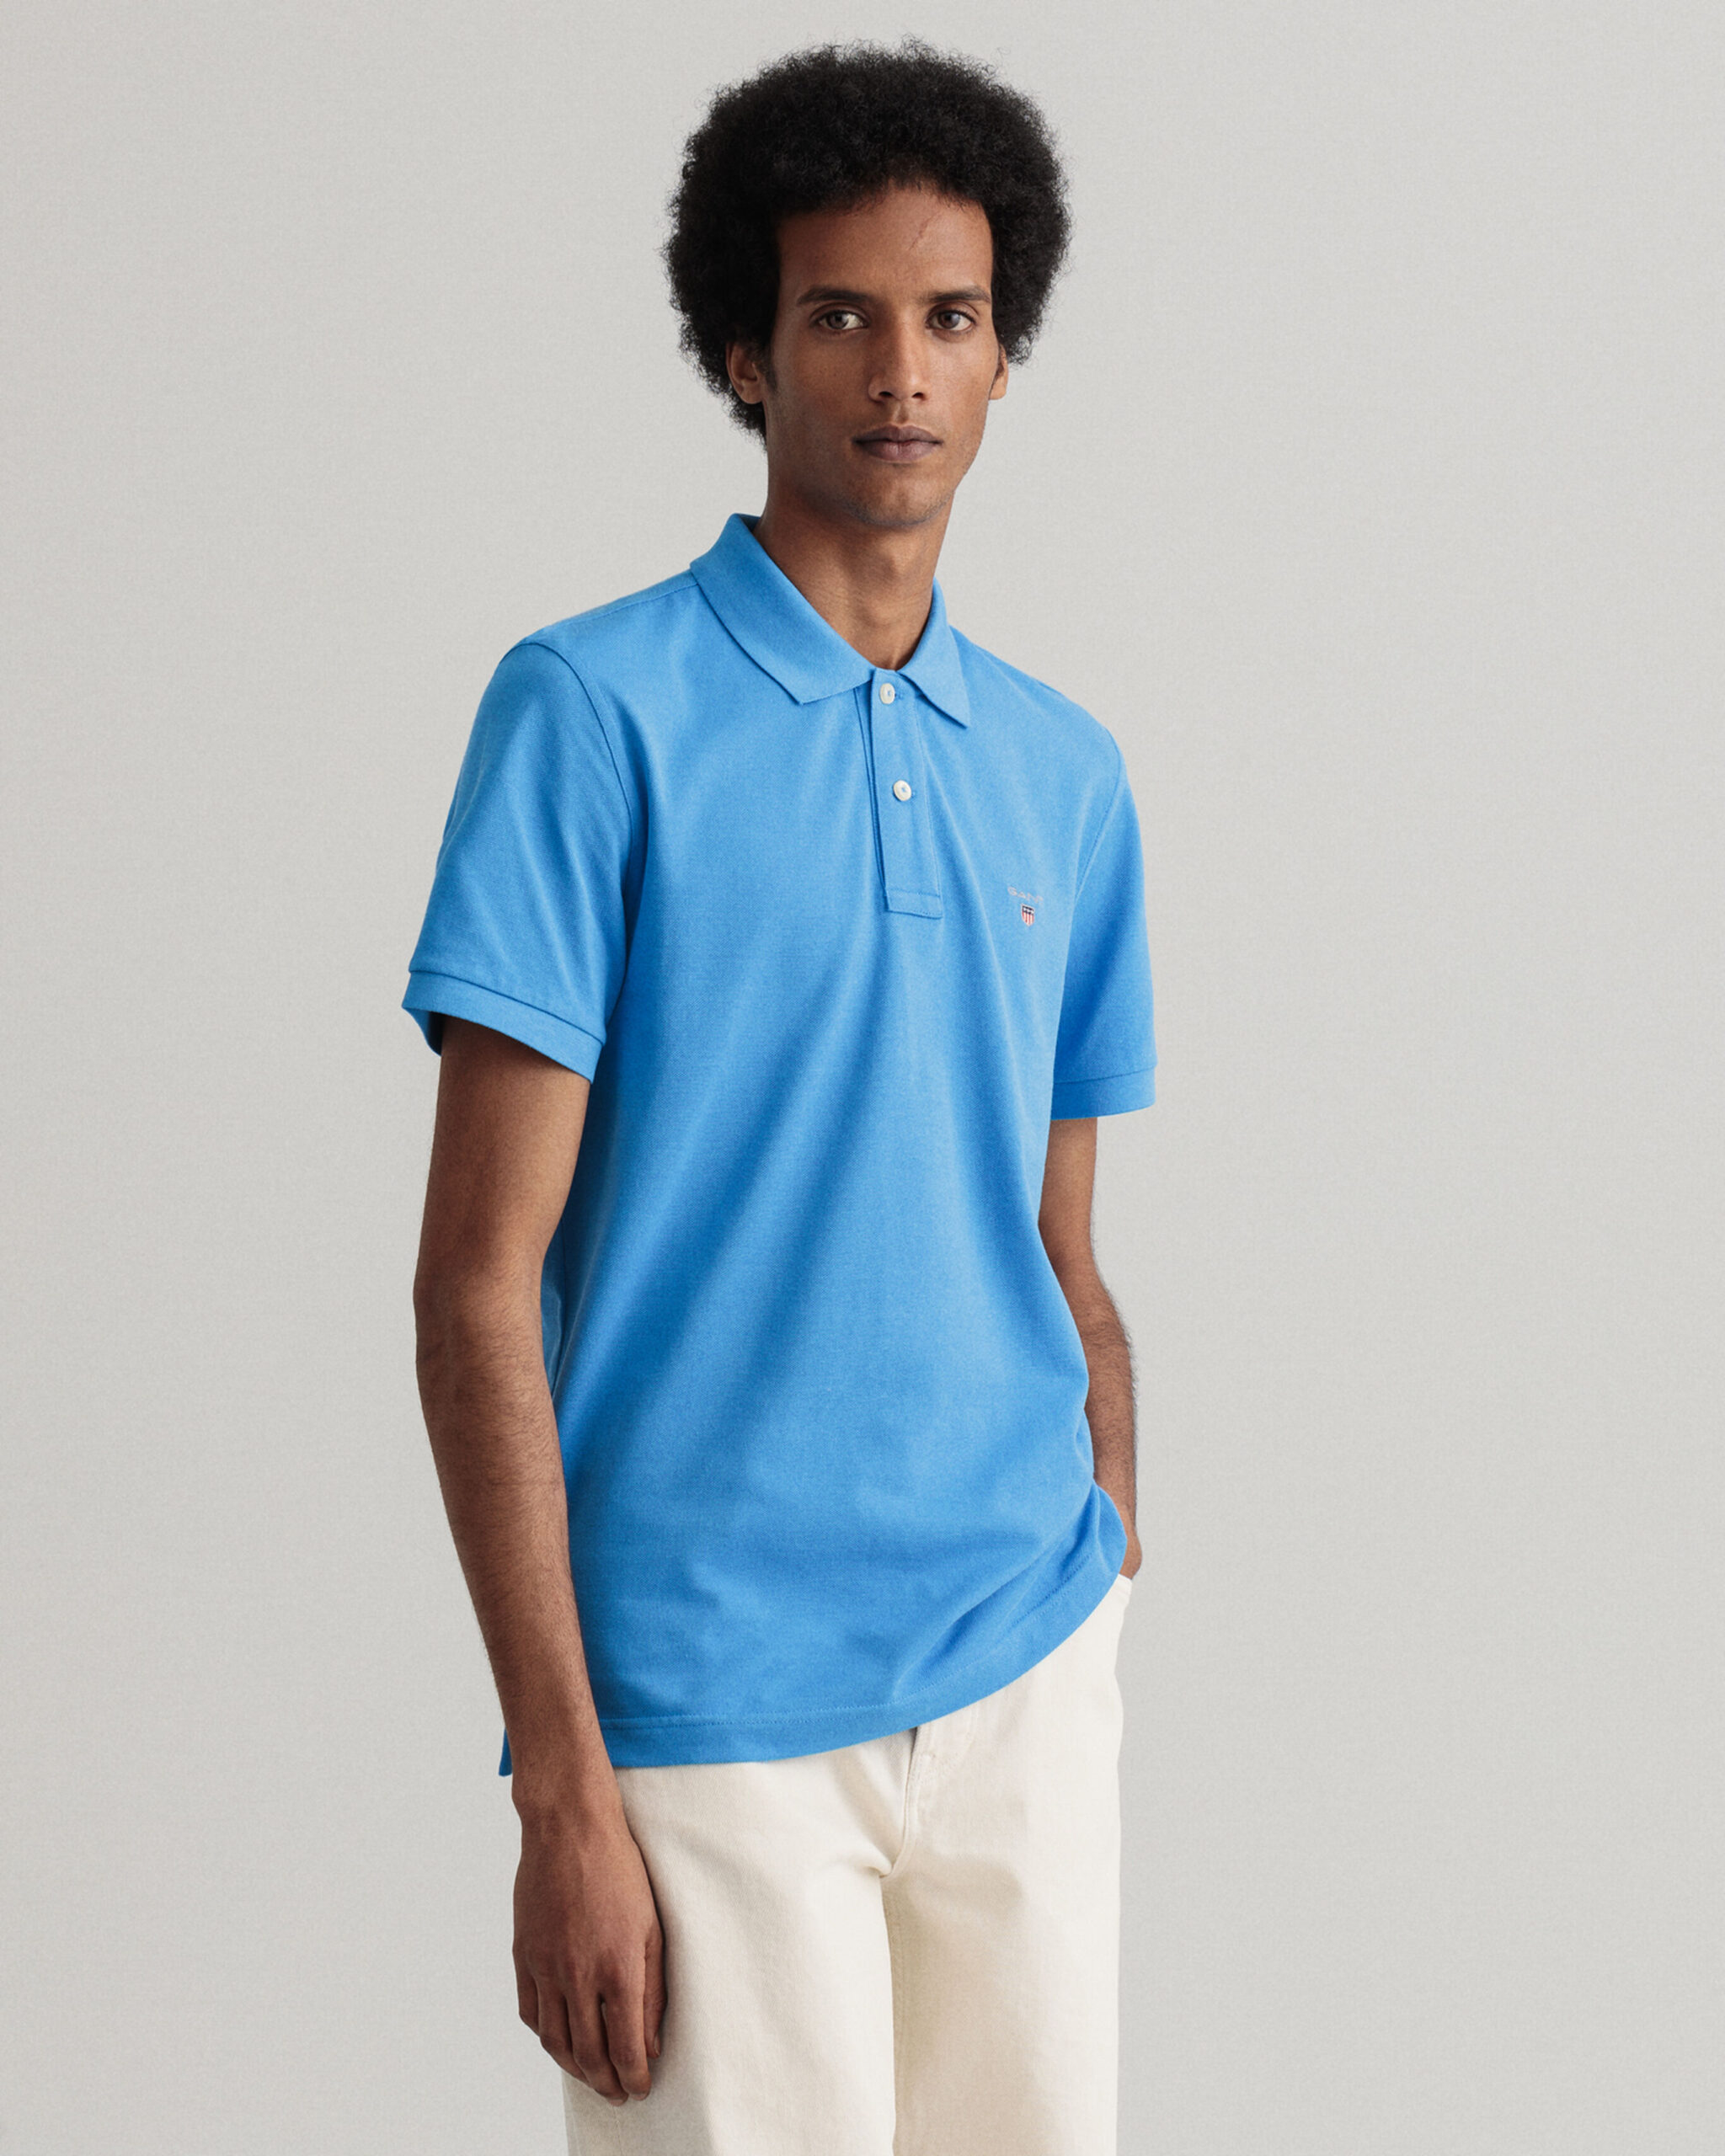 Gant Original Pique Polo Shirt - Day Blue - Corcoran's Menswear